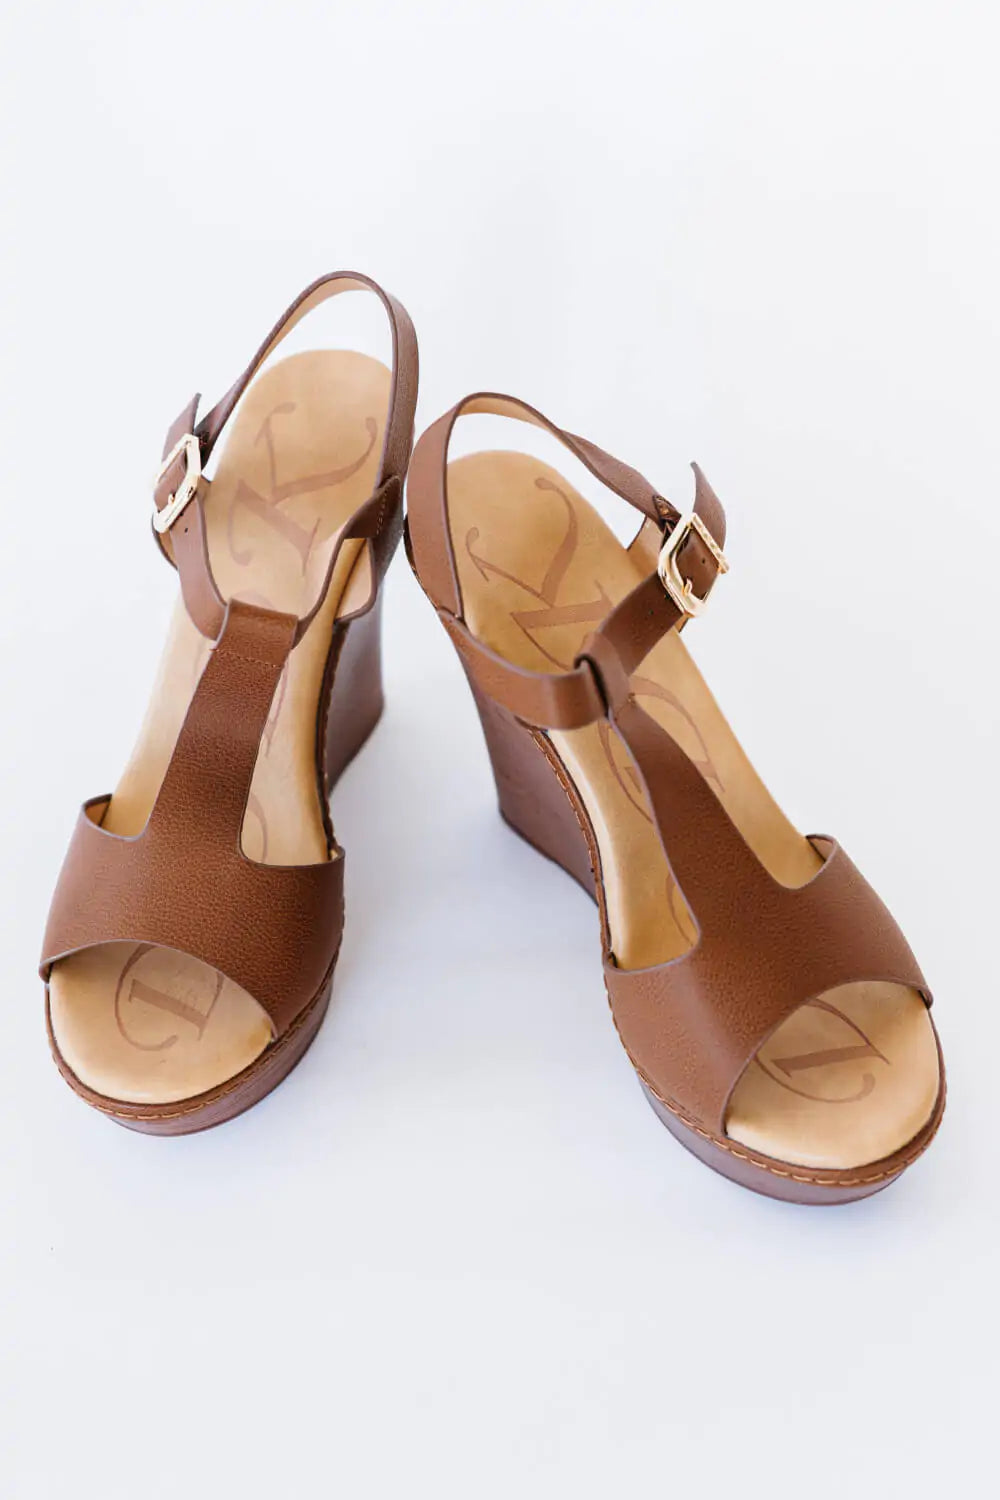 Tan Wedge Platform Sandals 8.5